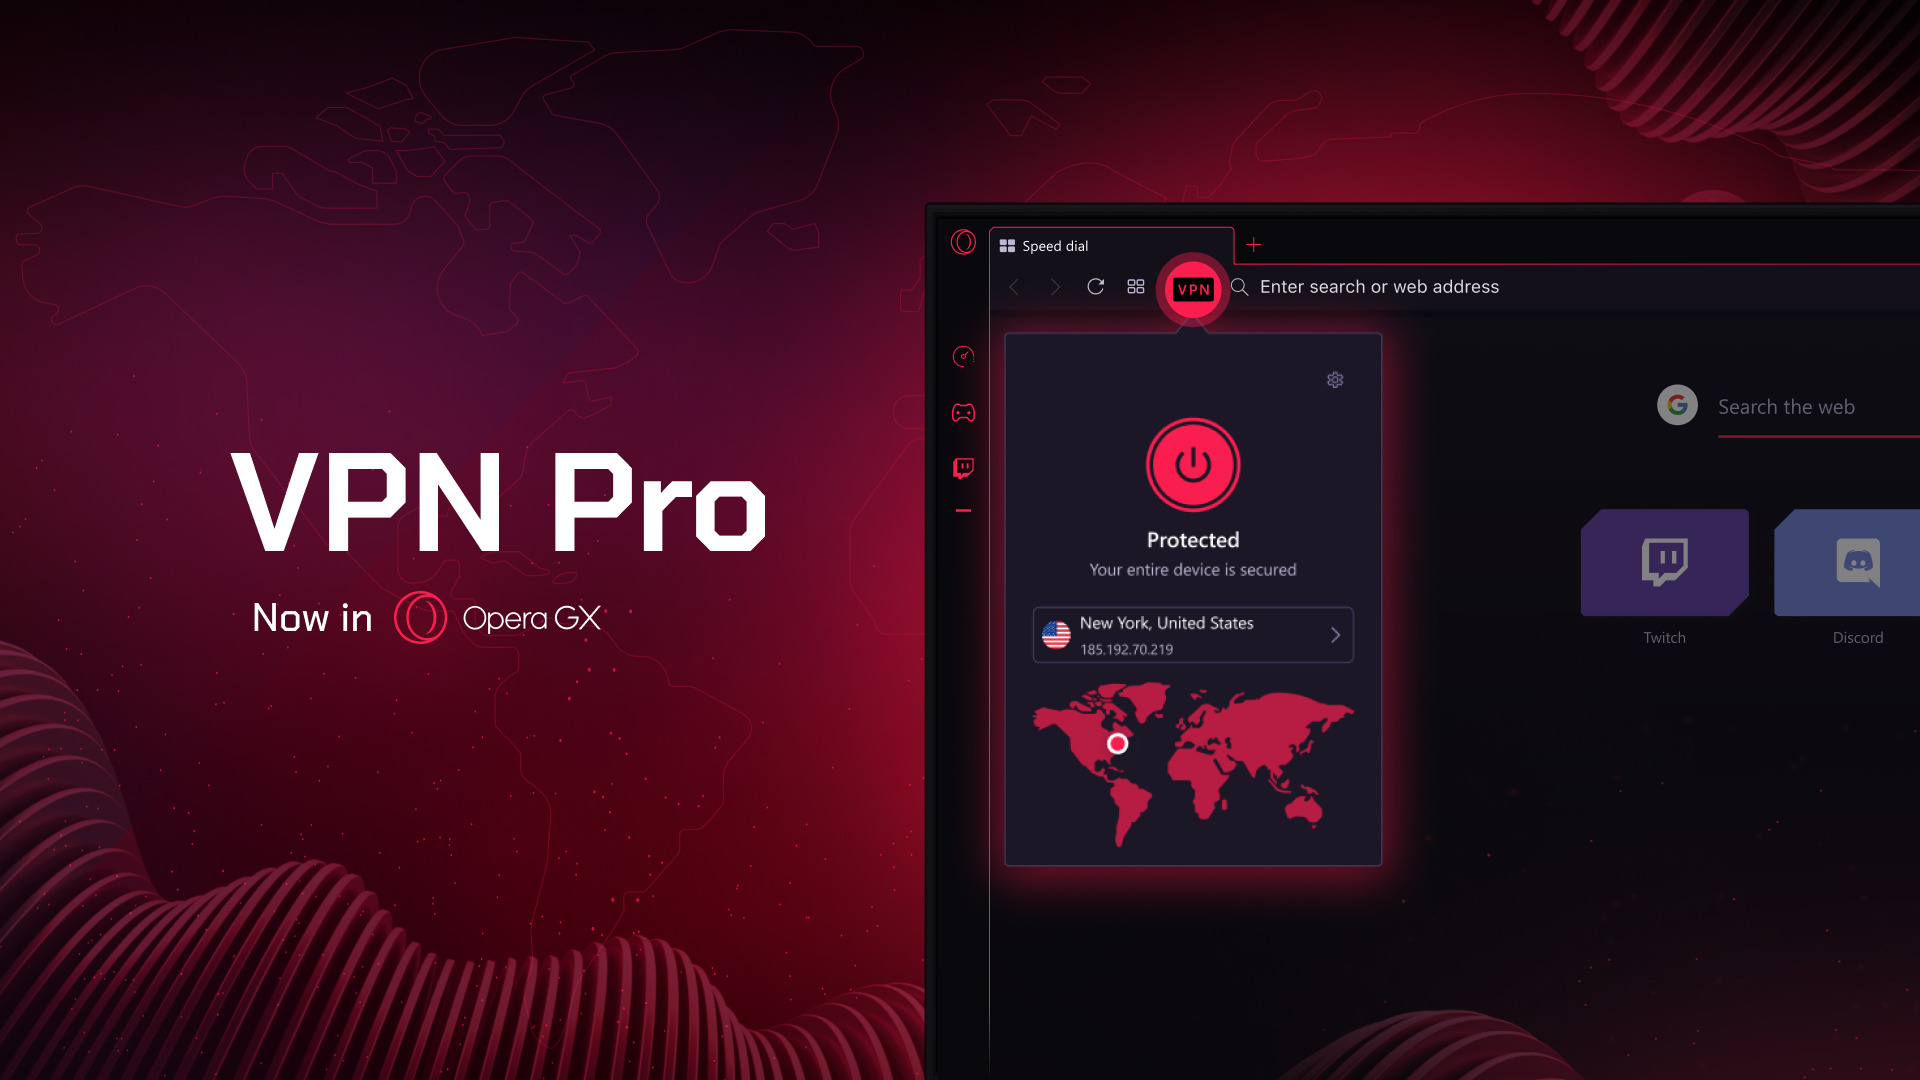 Opera GX has now integrated VPN Pro.